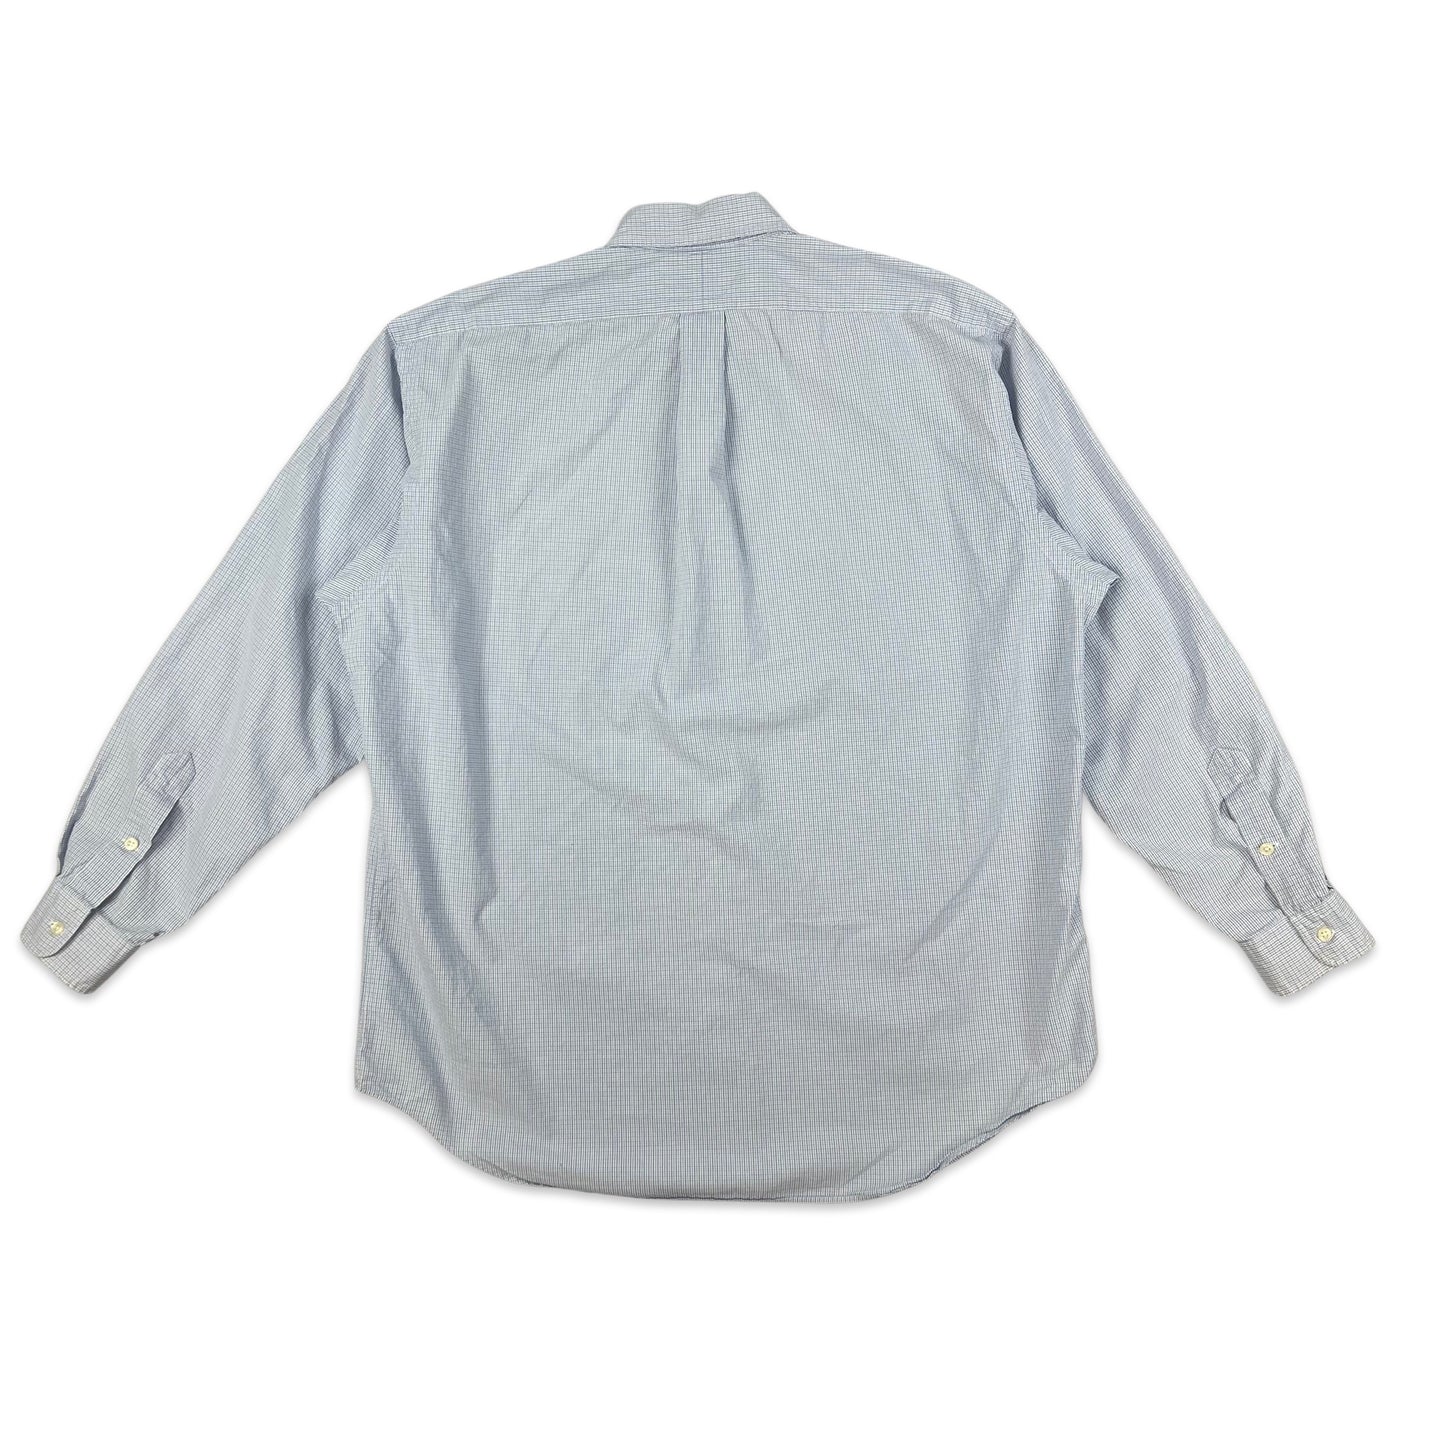 00s Vintage Ralph Lauren Check Shirt Blue White L XL 2XL